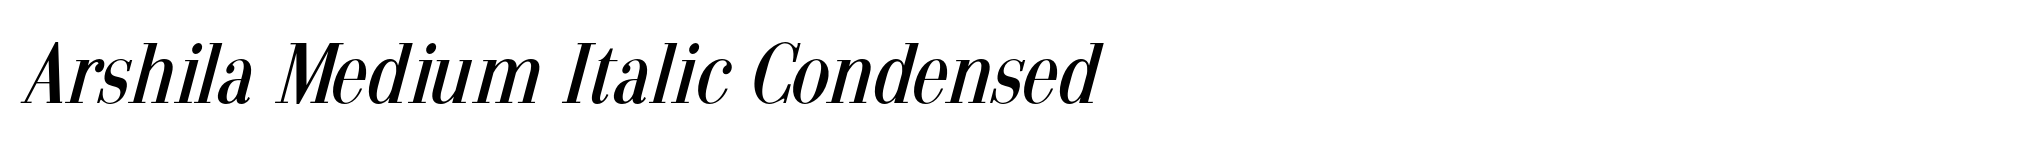 Arshila Medium Italic Condensed image